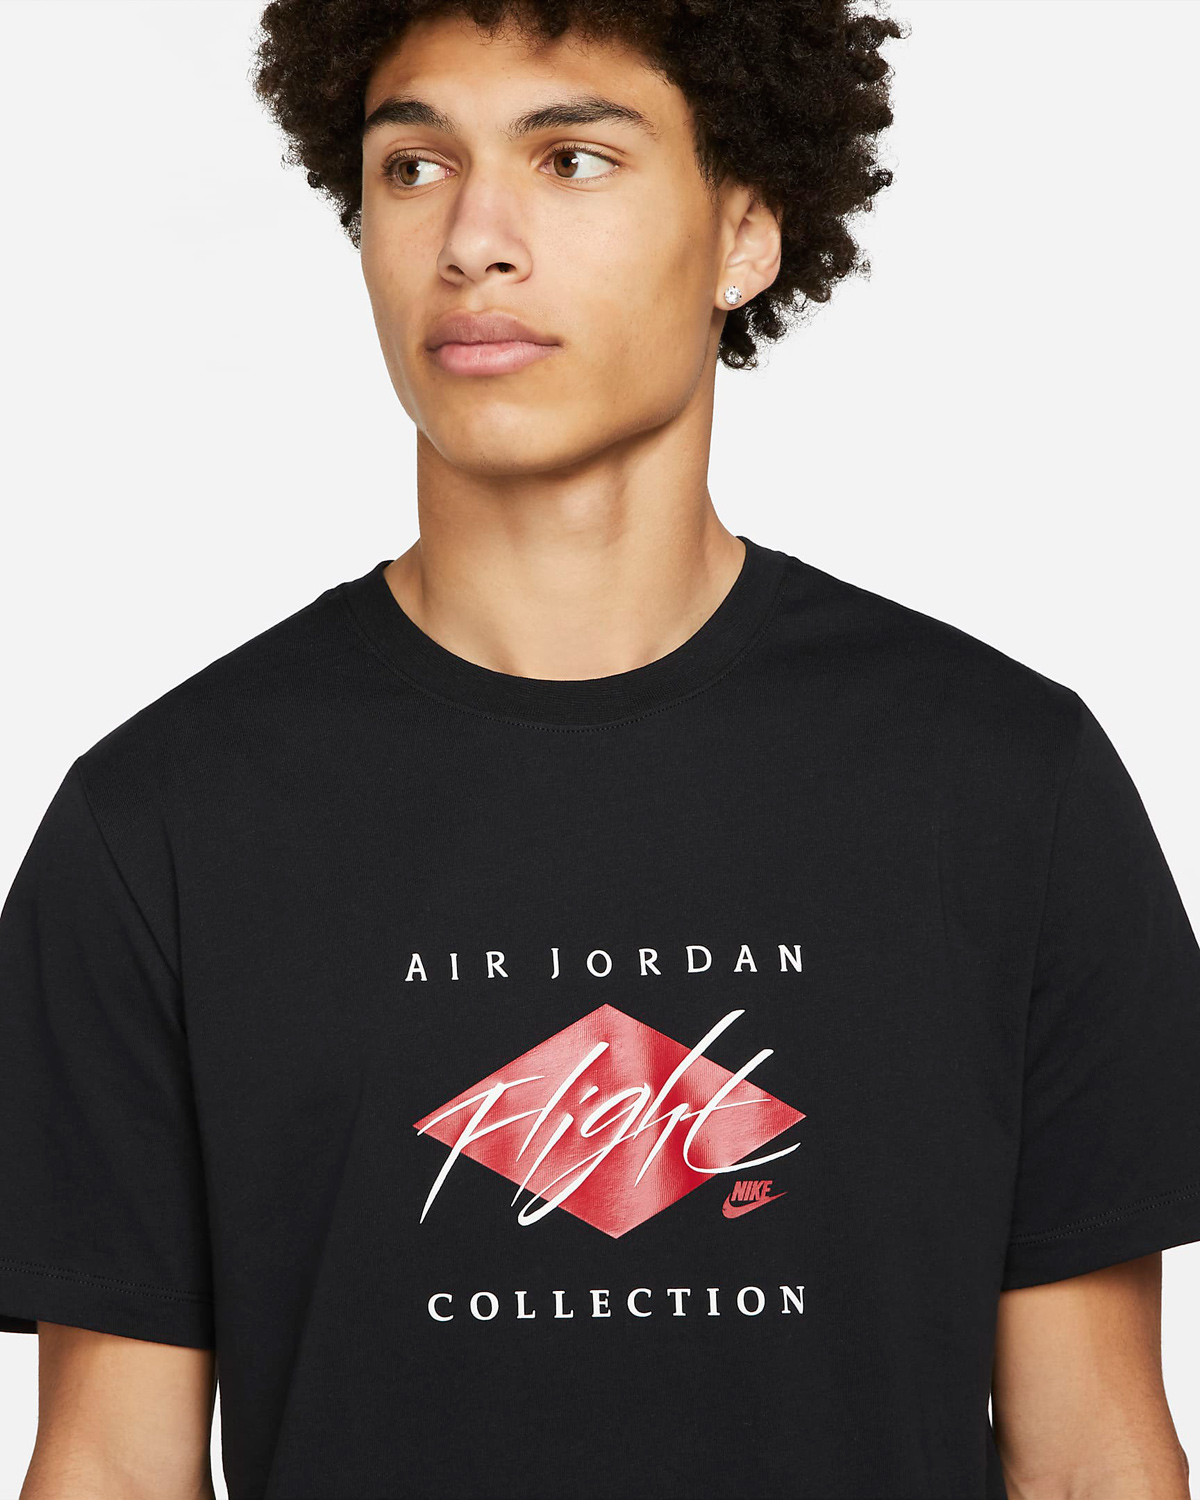 Air Jordan 1 High Rebellionaire Shirts to Match